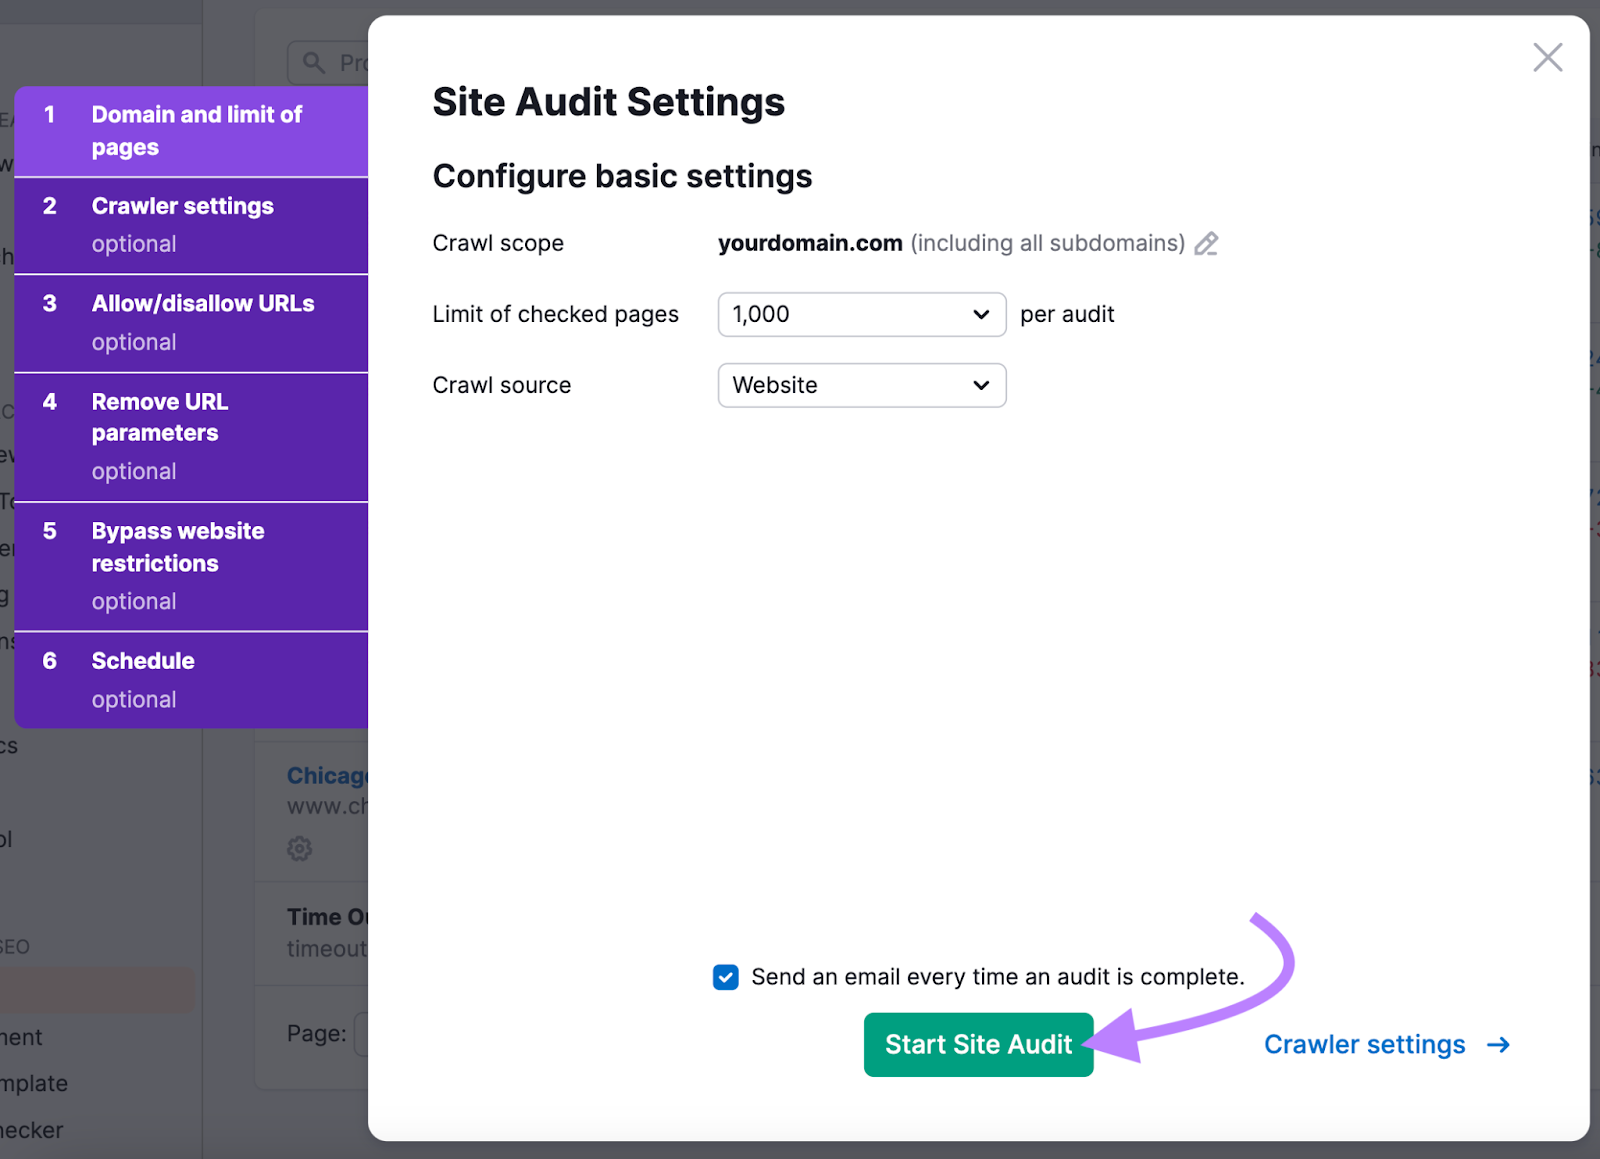 Site Audit settings configuration screen.